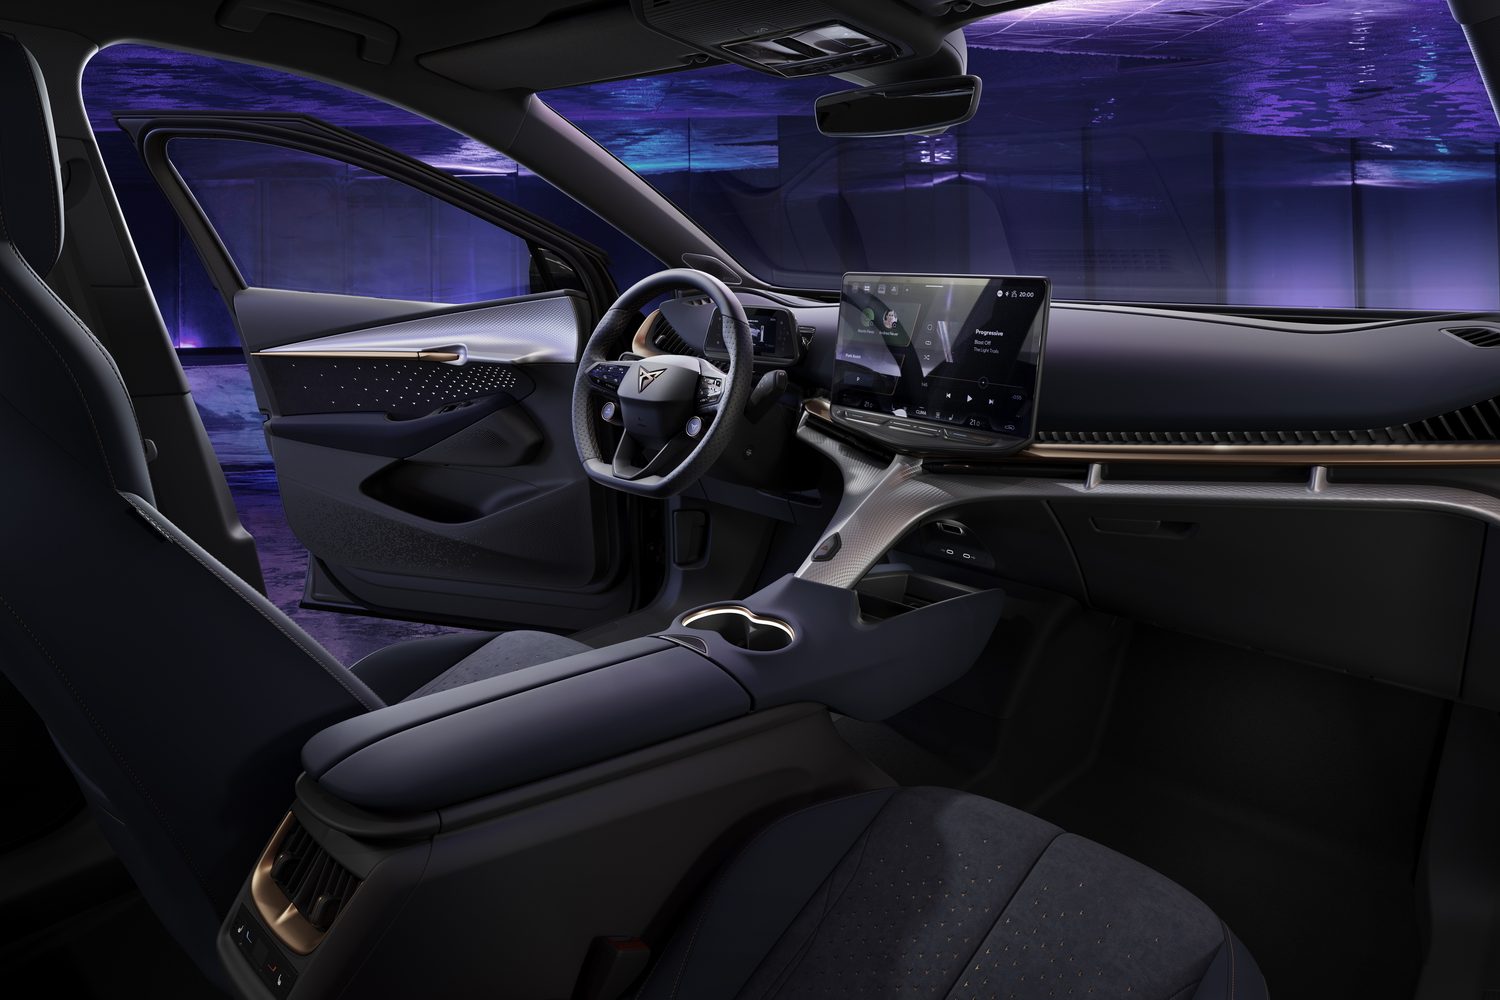 Cupra reveals new electric Tavascan SUV